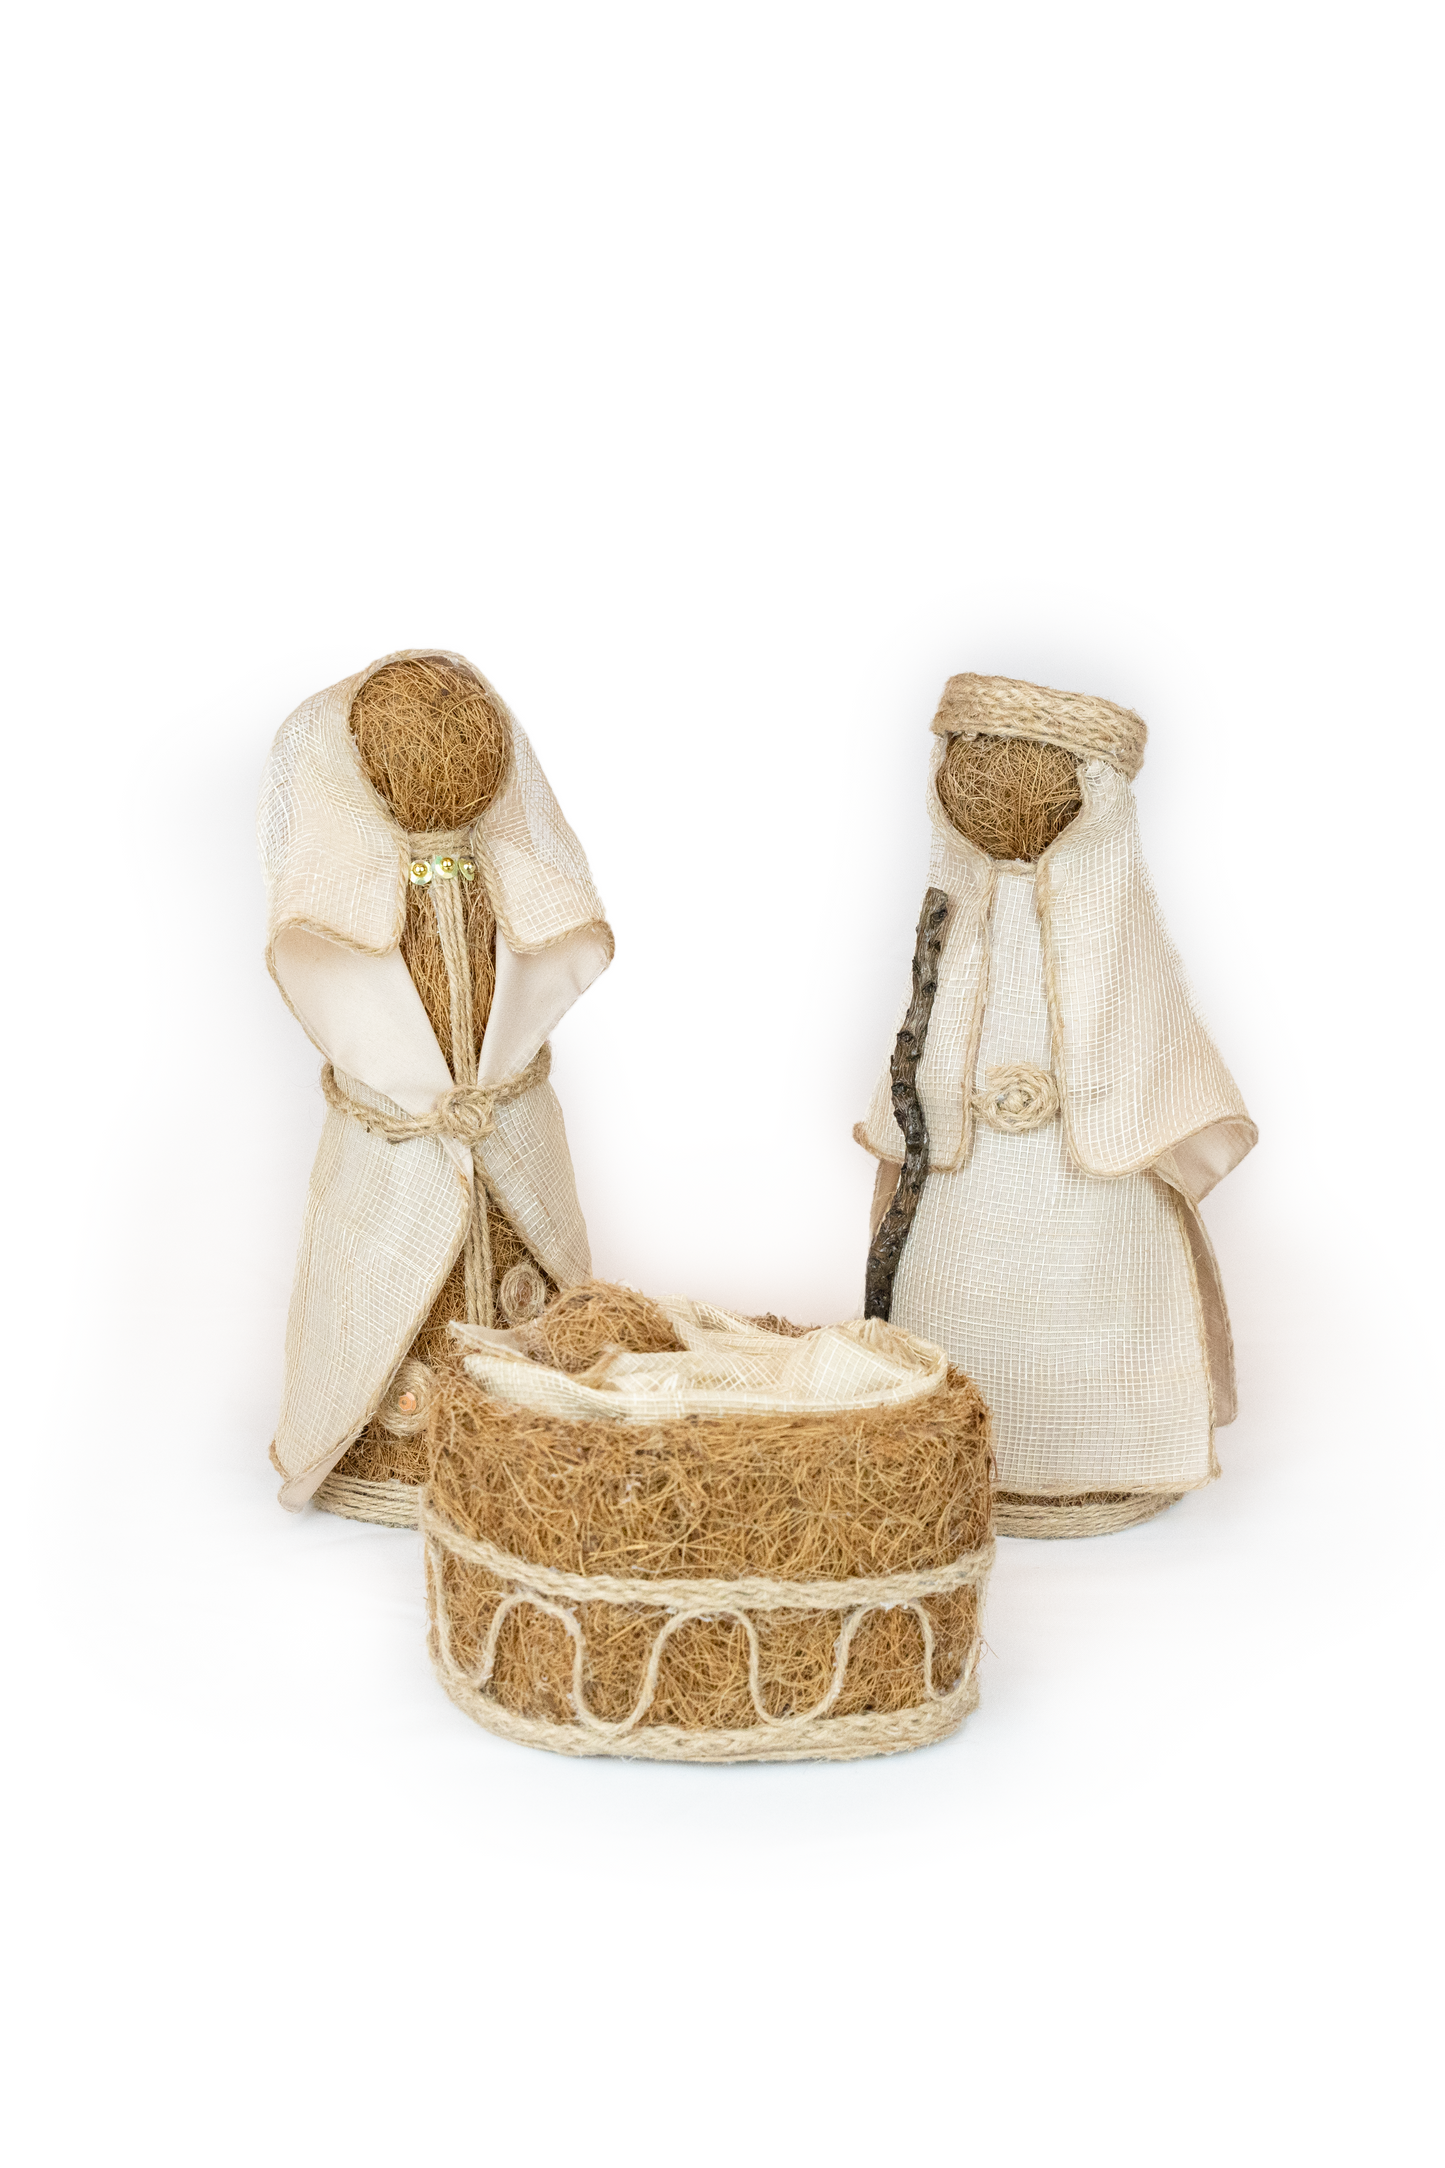 Coconut Fiber Nativity